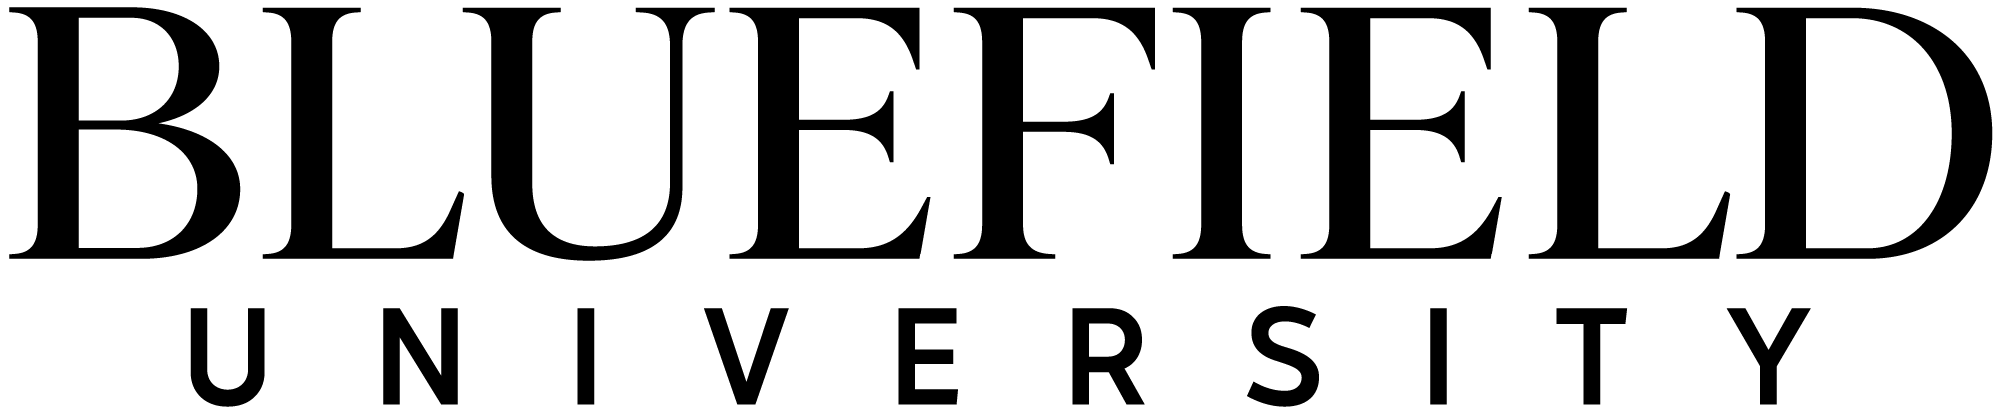 Bluefield University typeface logo in black.